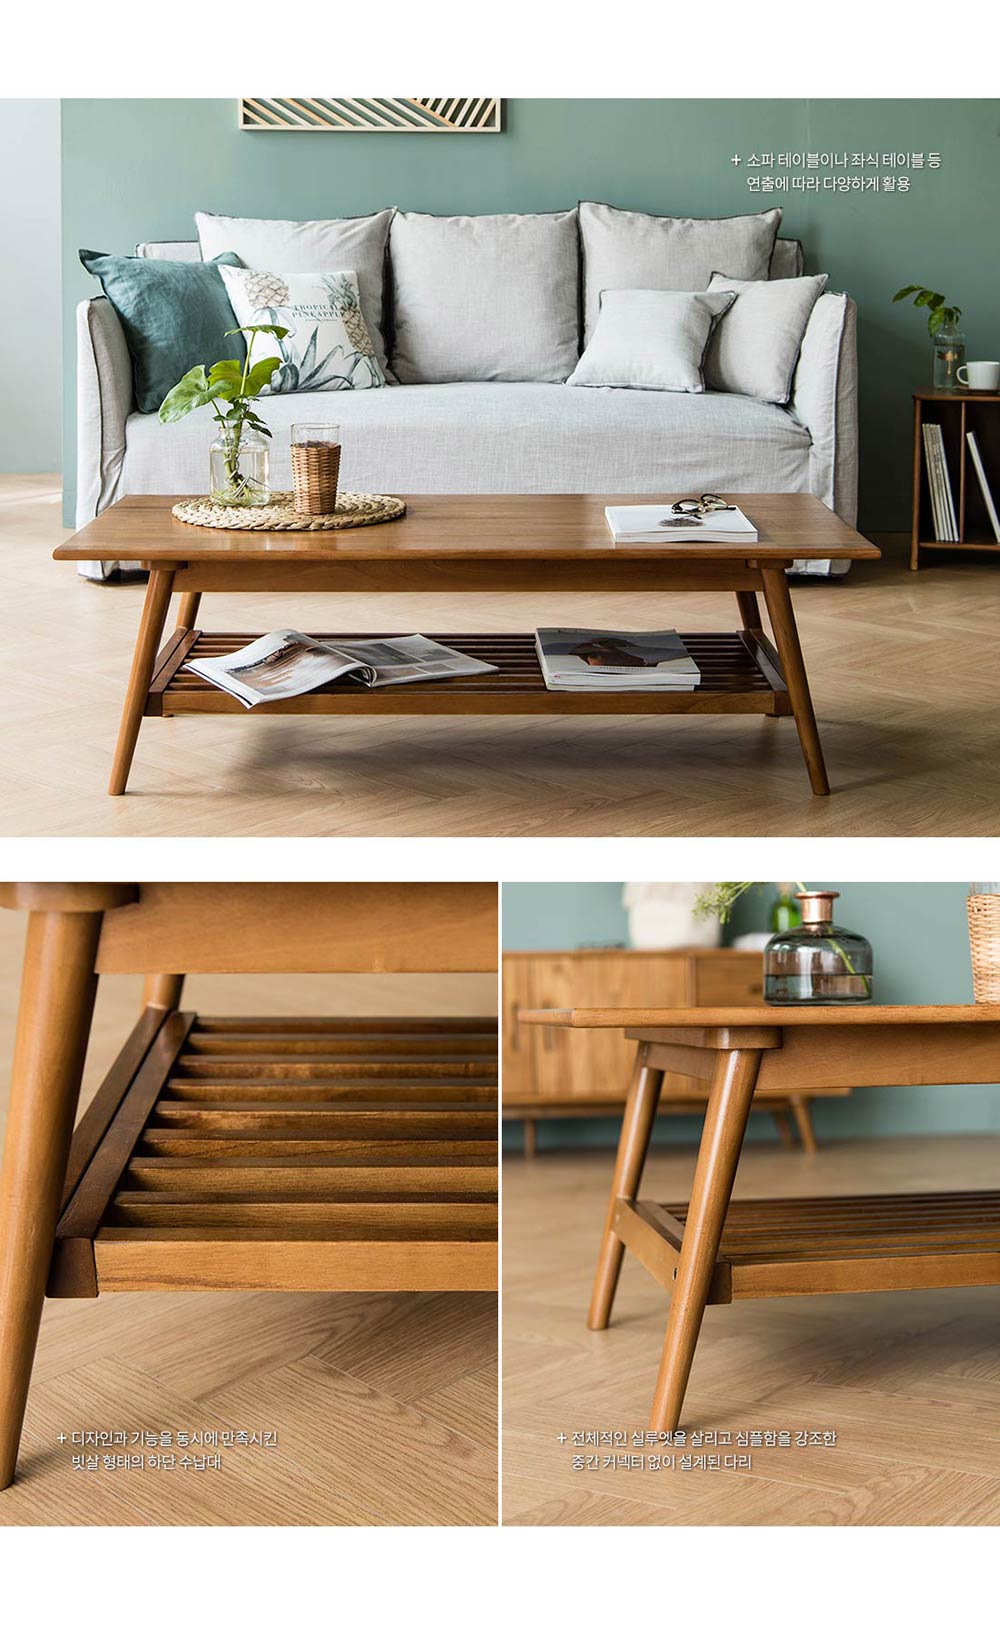 New Retro Sofa Table, Online, Furniture, Singapore,